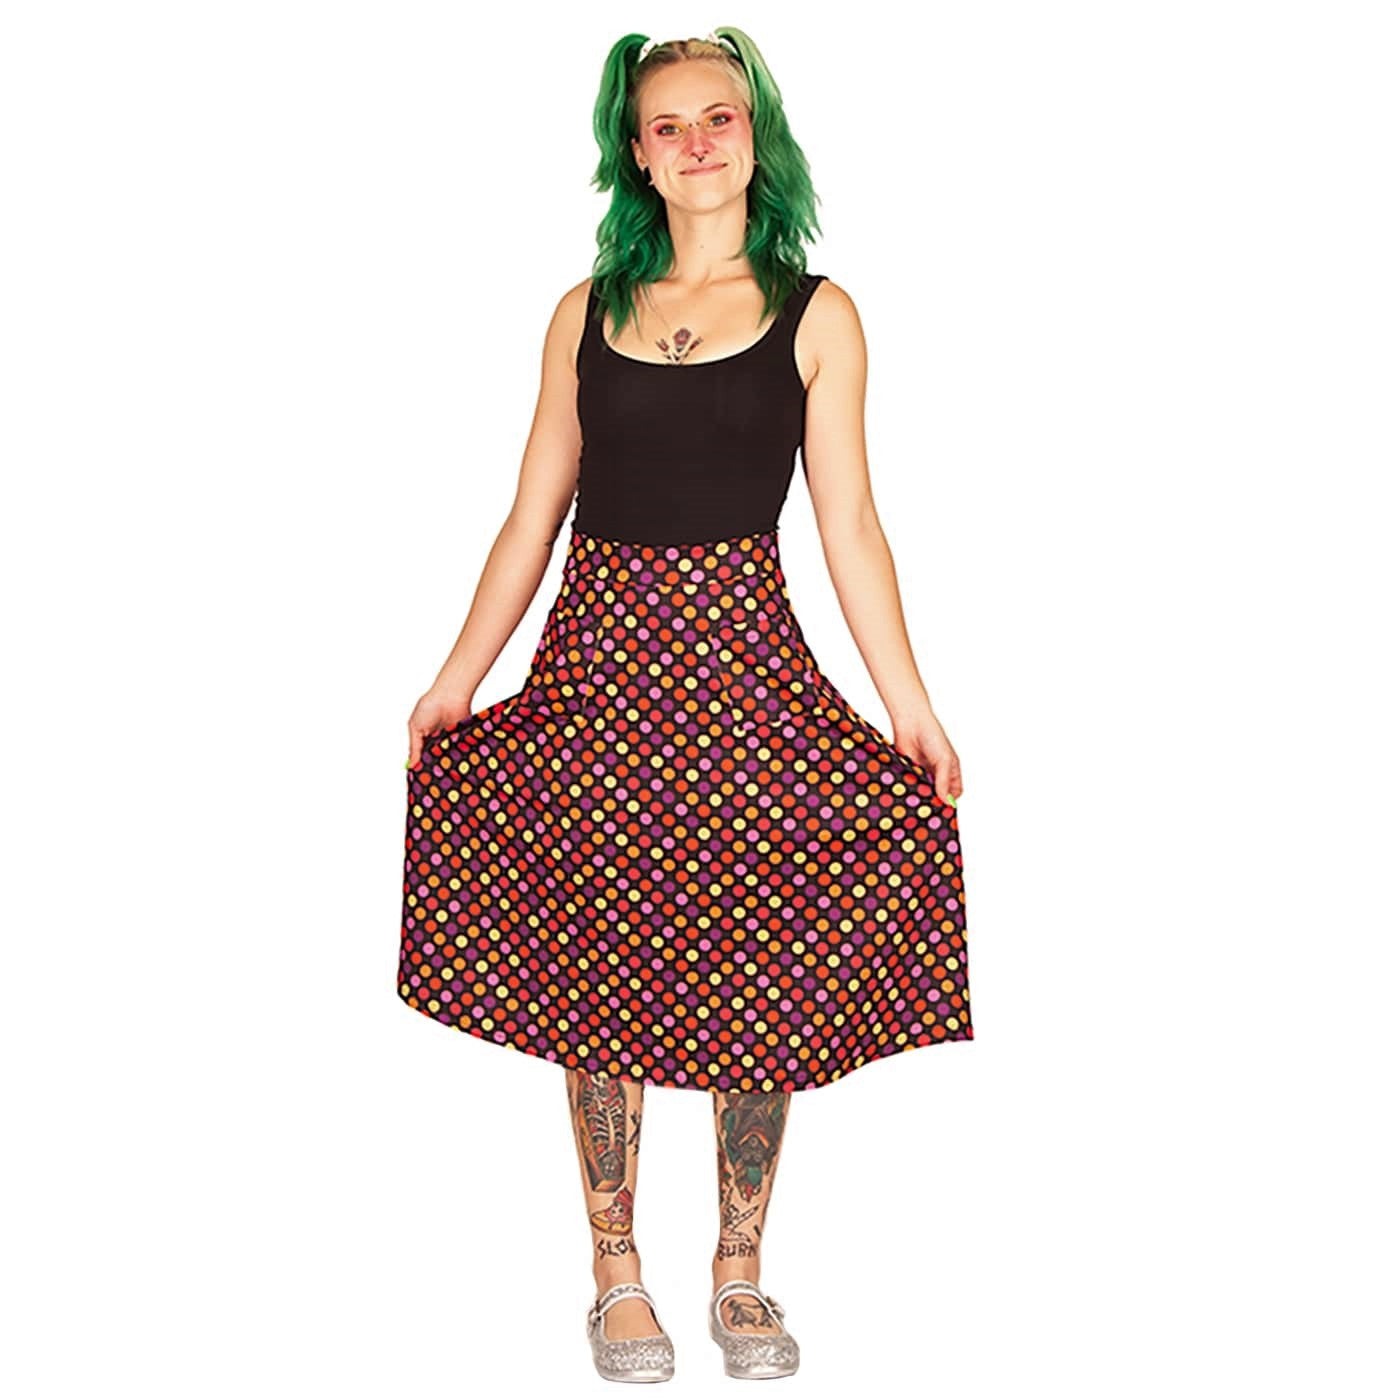 Pastel Confetti Original Skirt by RainbowsAndFairies.com (Polka Dots - Stripes - Spots - Skirt With Pockets - Aline Skirt - Vintage Inspired - Rock & Roll) - SKU: CL_OSKRT_CONFT_PAS - Pic 03